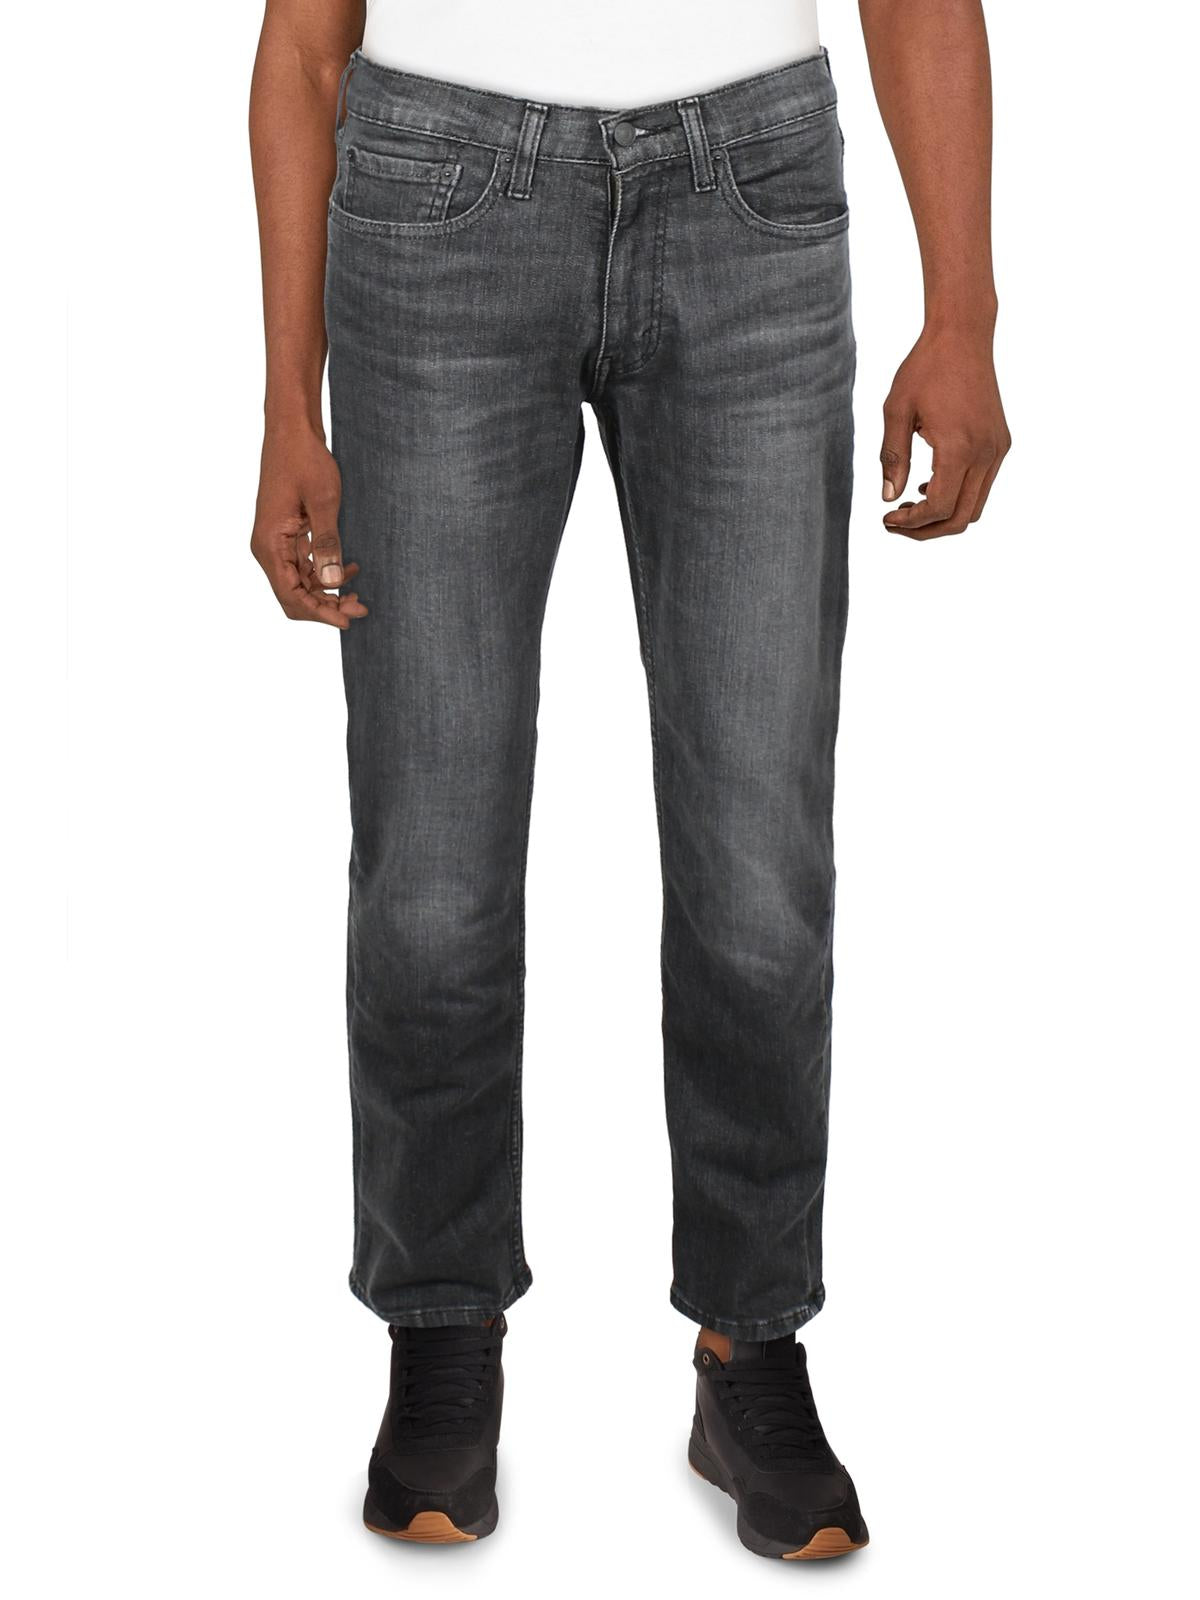 LEVI'S 514 Mens Denim Regular Fit Straight Leg Jeans